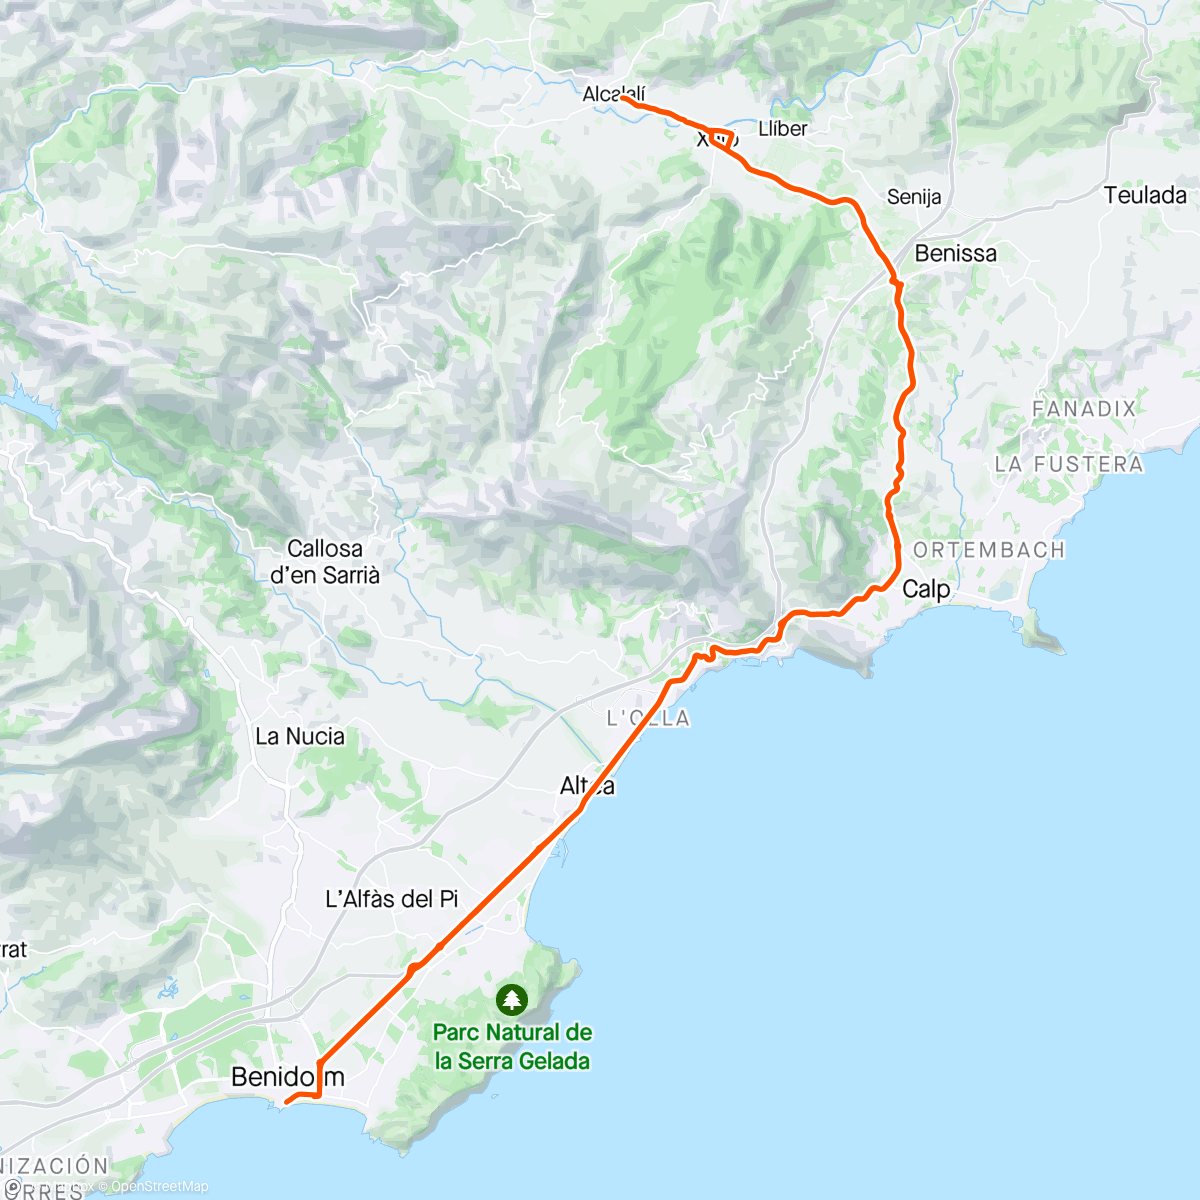 Map of the activity, Benidorm-Benisa-Alcalali-Xalon-Benidorm